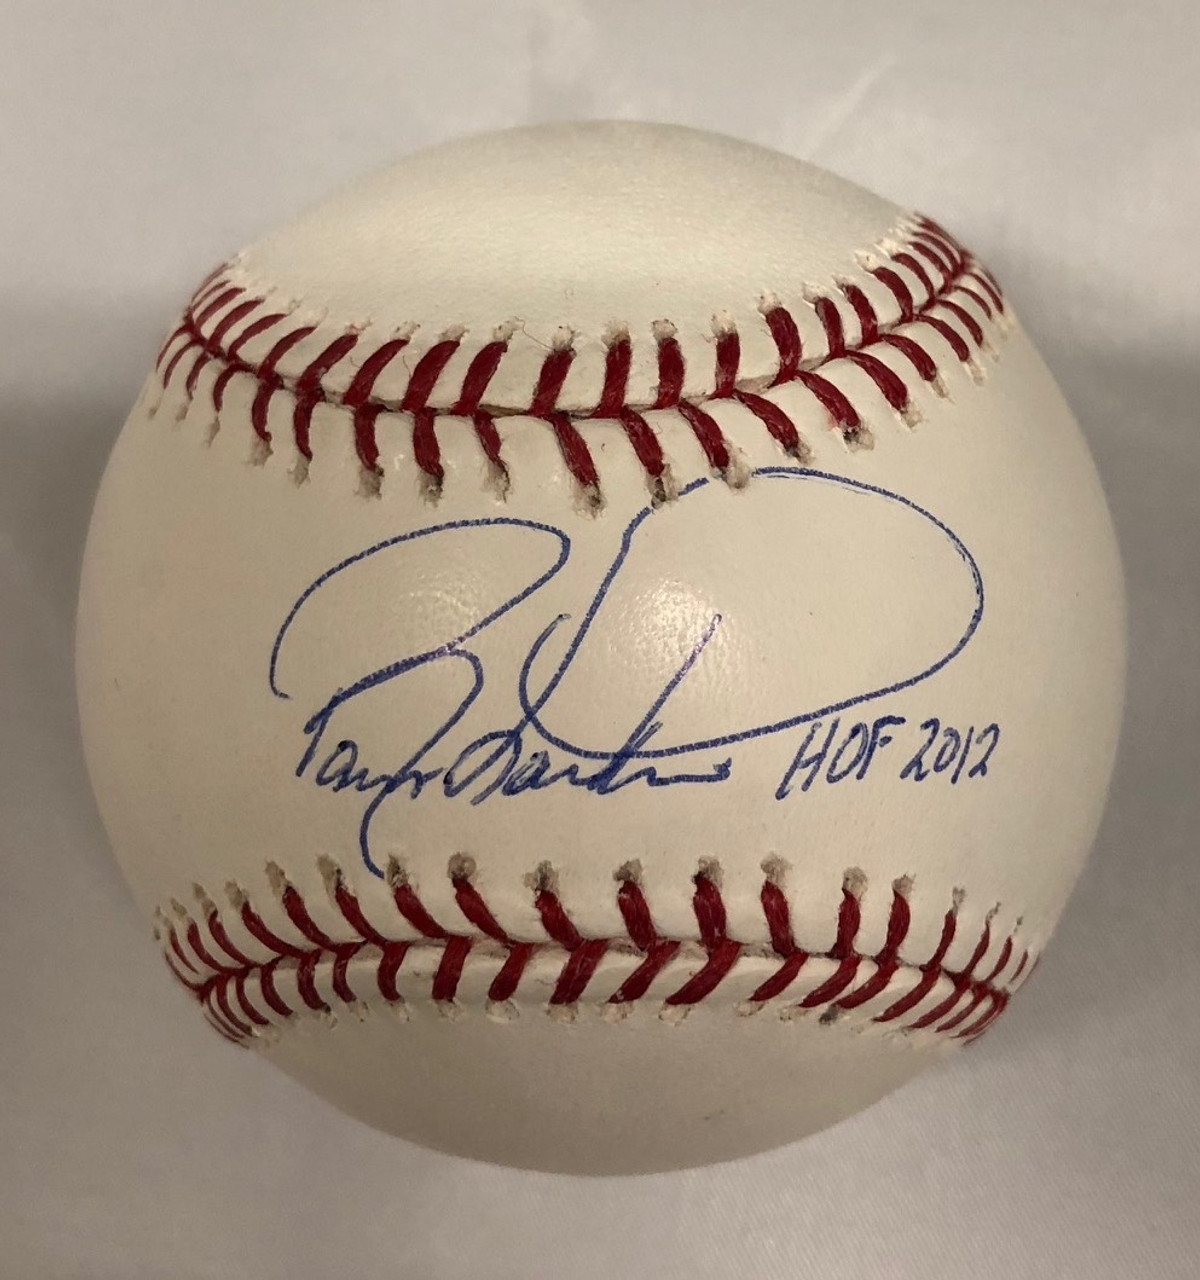 Barry Larkin Autographed Baseball with HOF 2012 Inscription